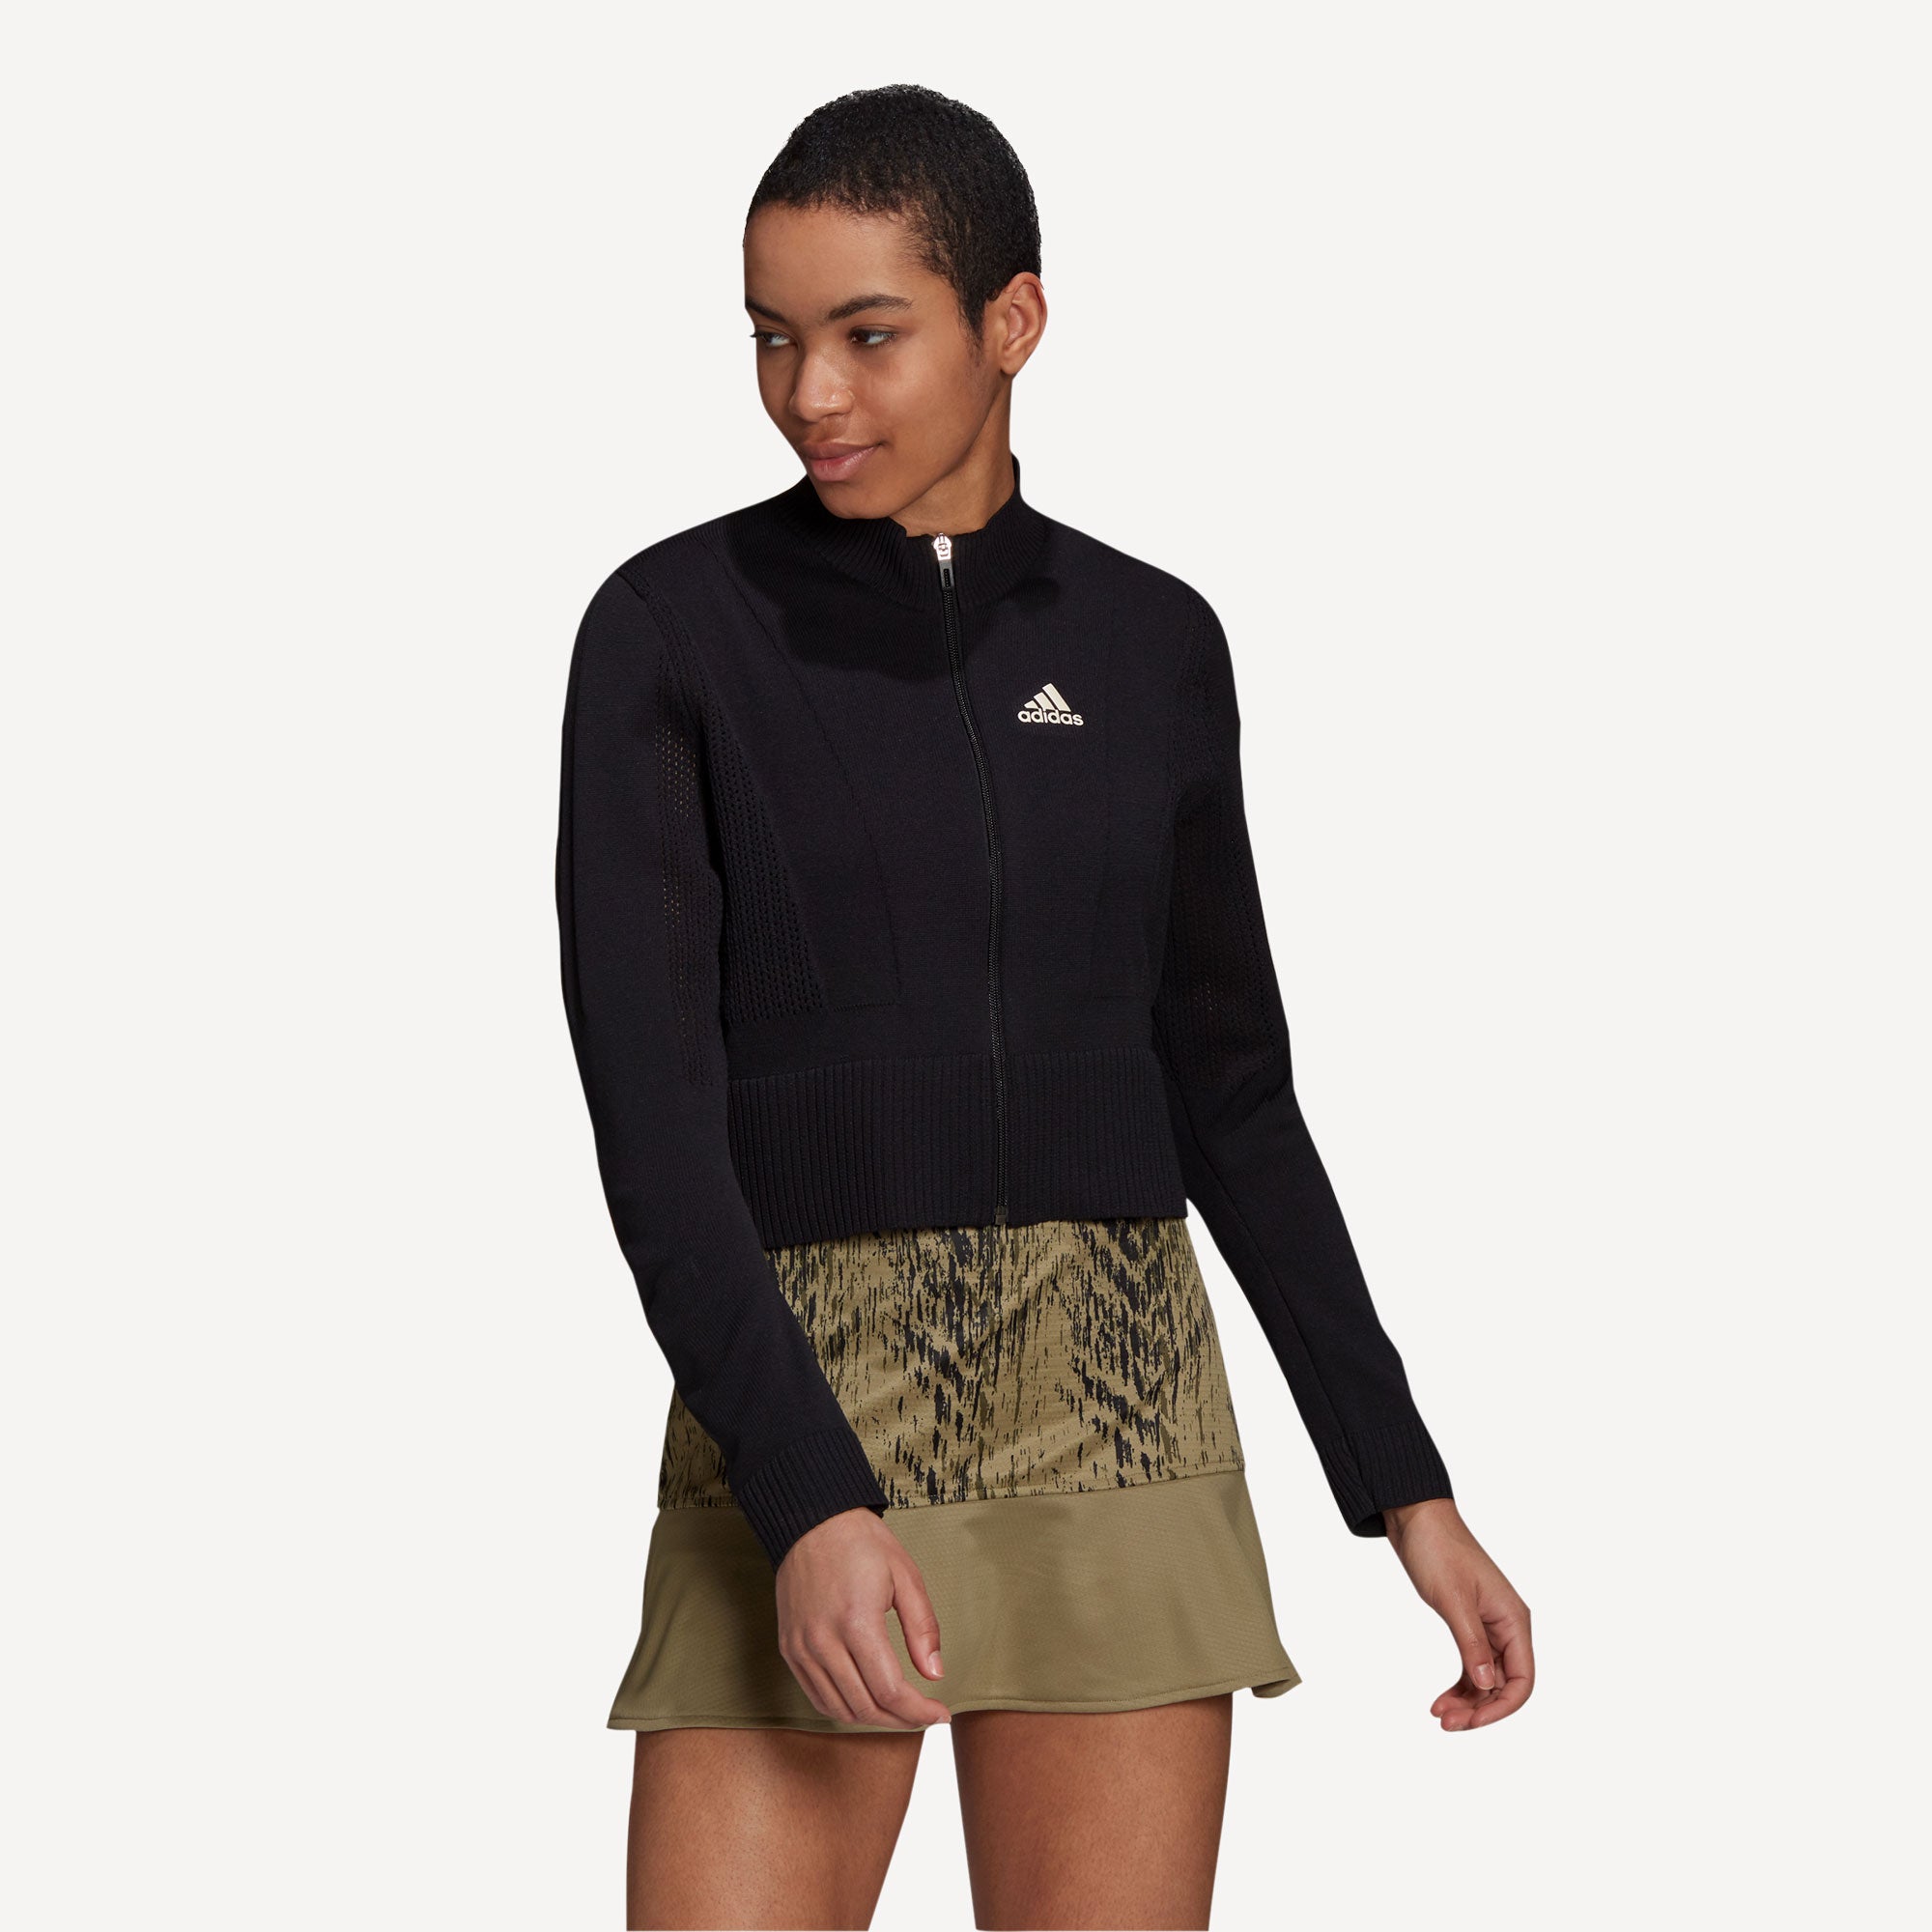 adidas Primeknit Women's Tennis Jacket Black (1)